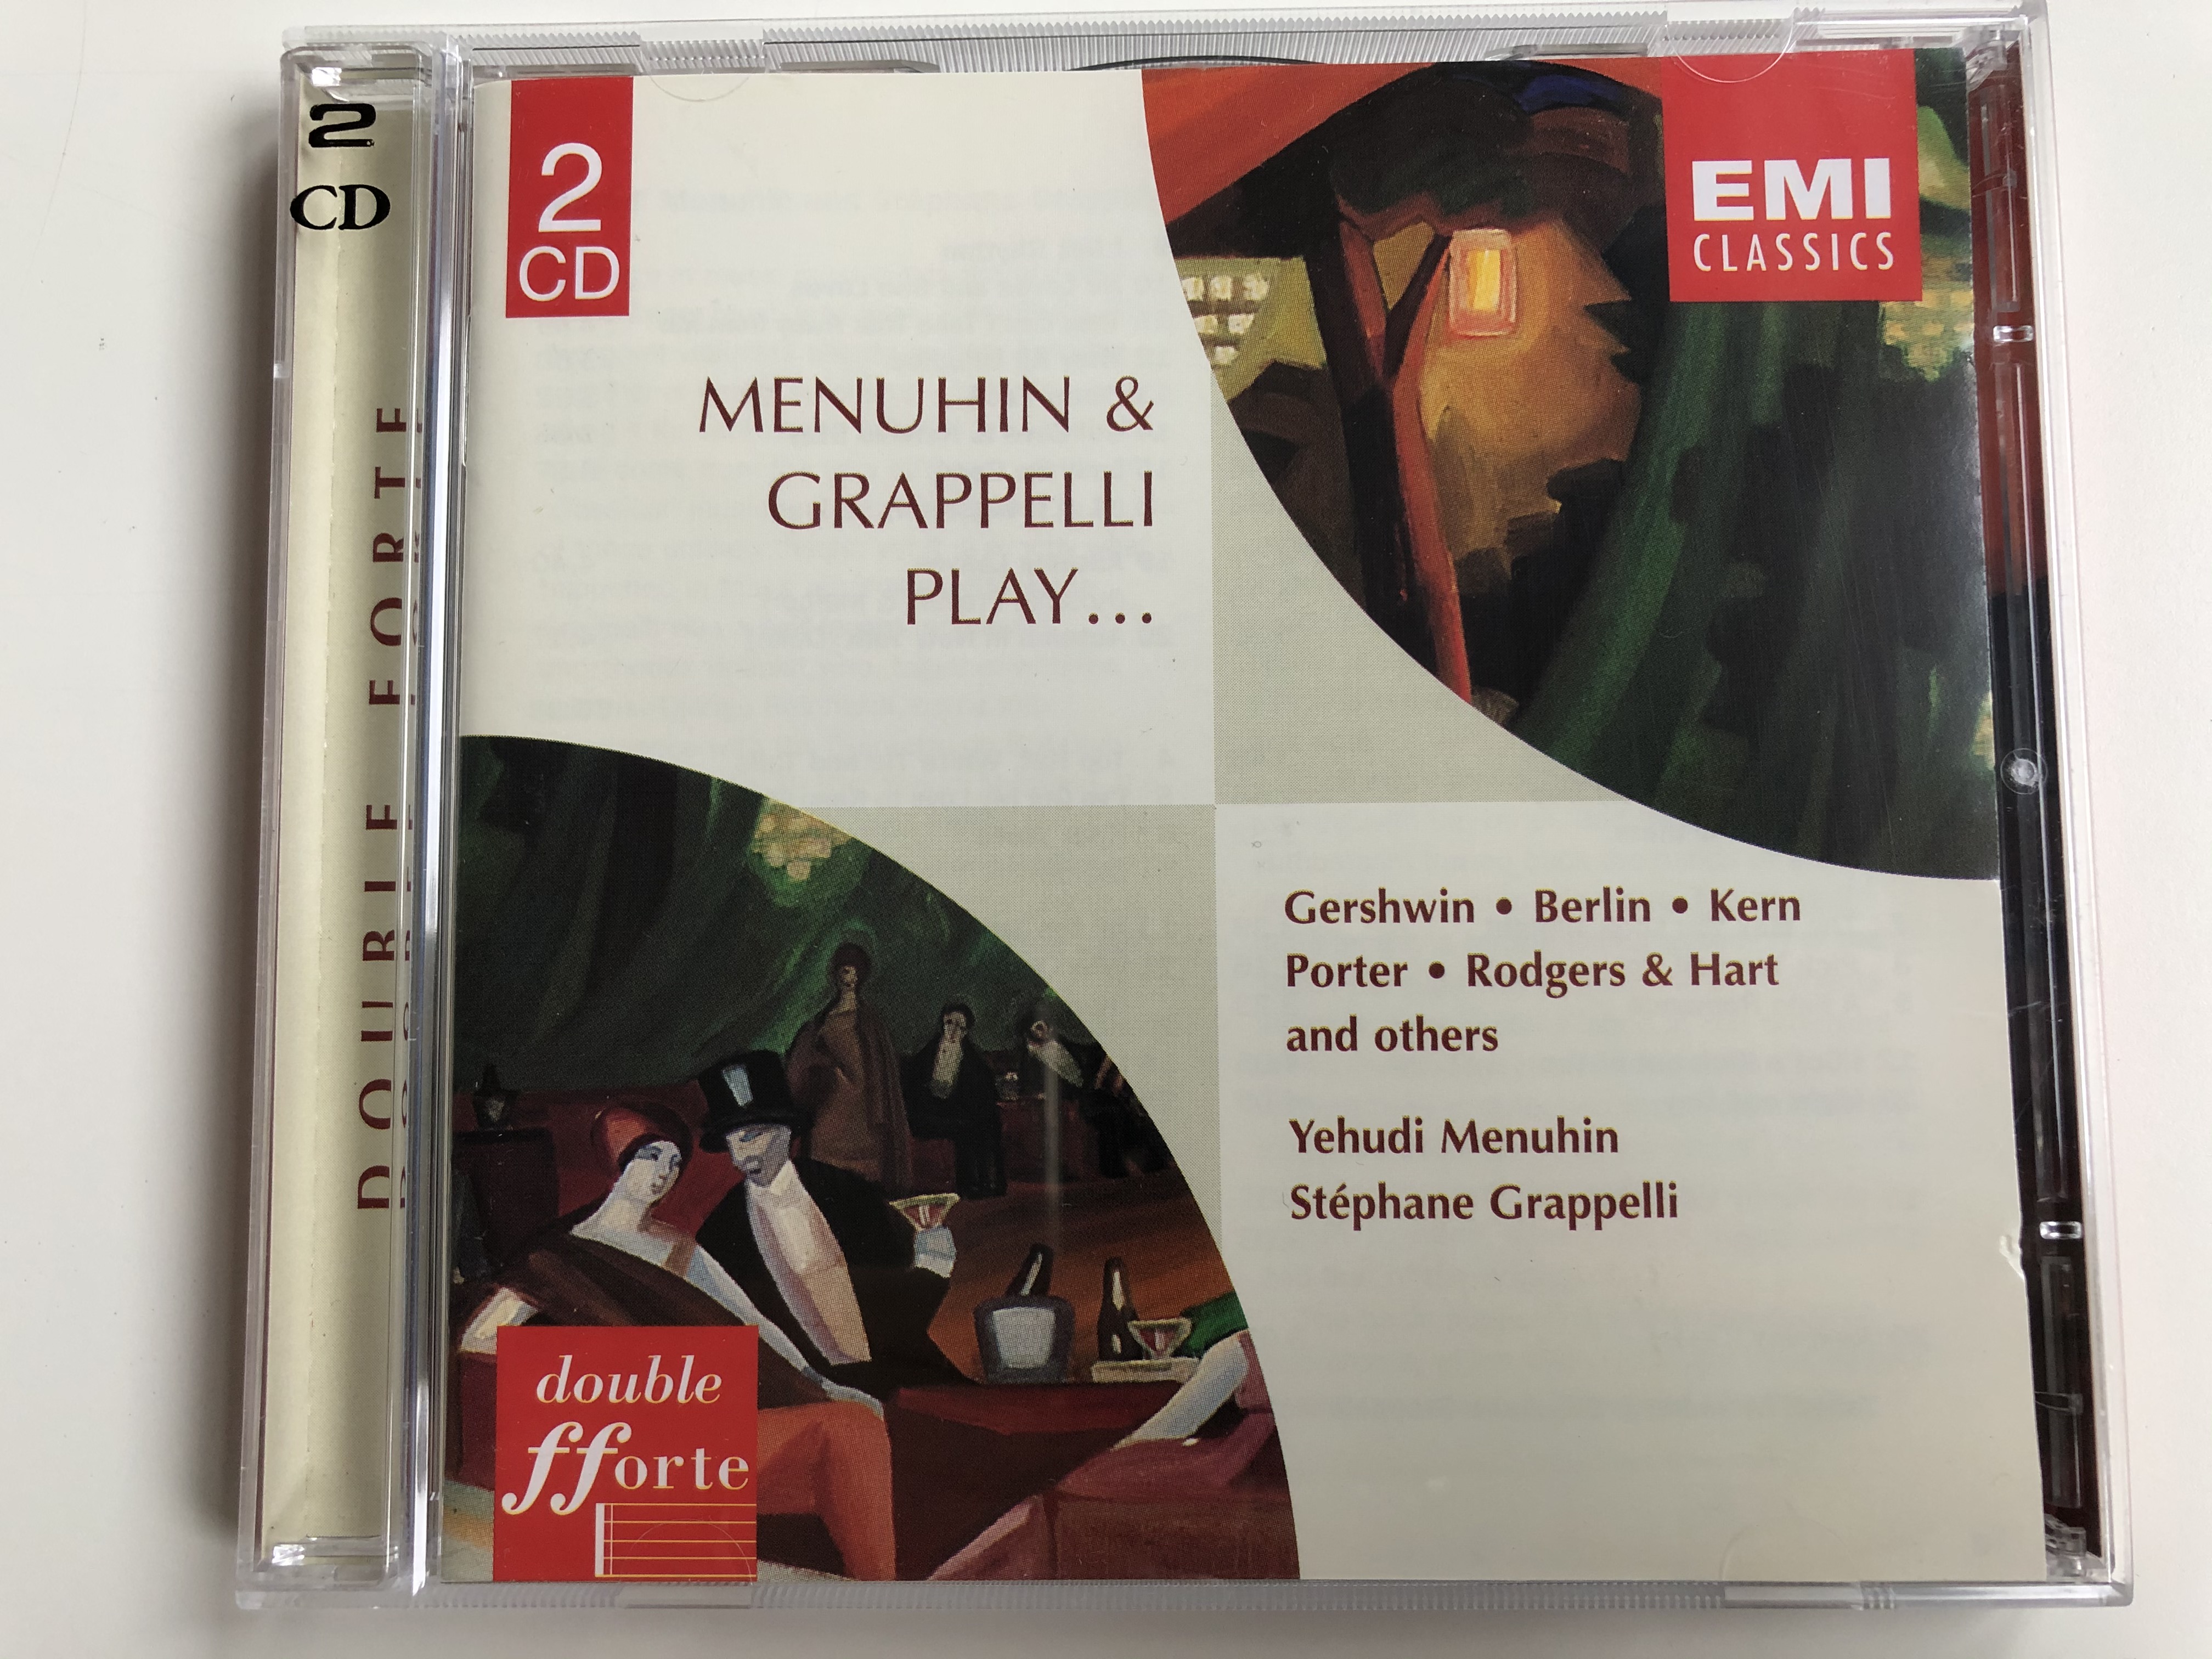 menuhin-grappelli-play...-gershwin-berlin-kern-porter-rodgers-hart-and-others-yehudi-menuhin-st-phane-grappelli-double-orte-emi-classics-2x-audio-cd-1999-stereo-724357338028-1-.jpg